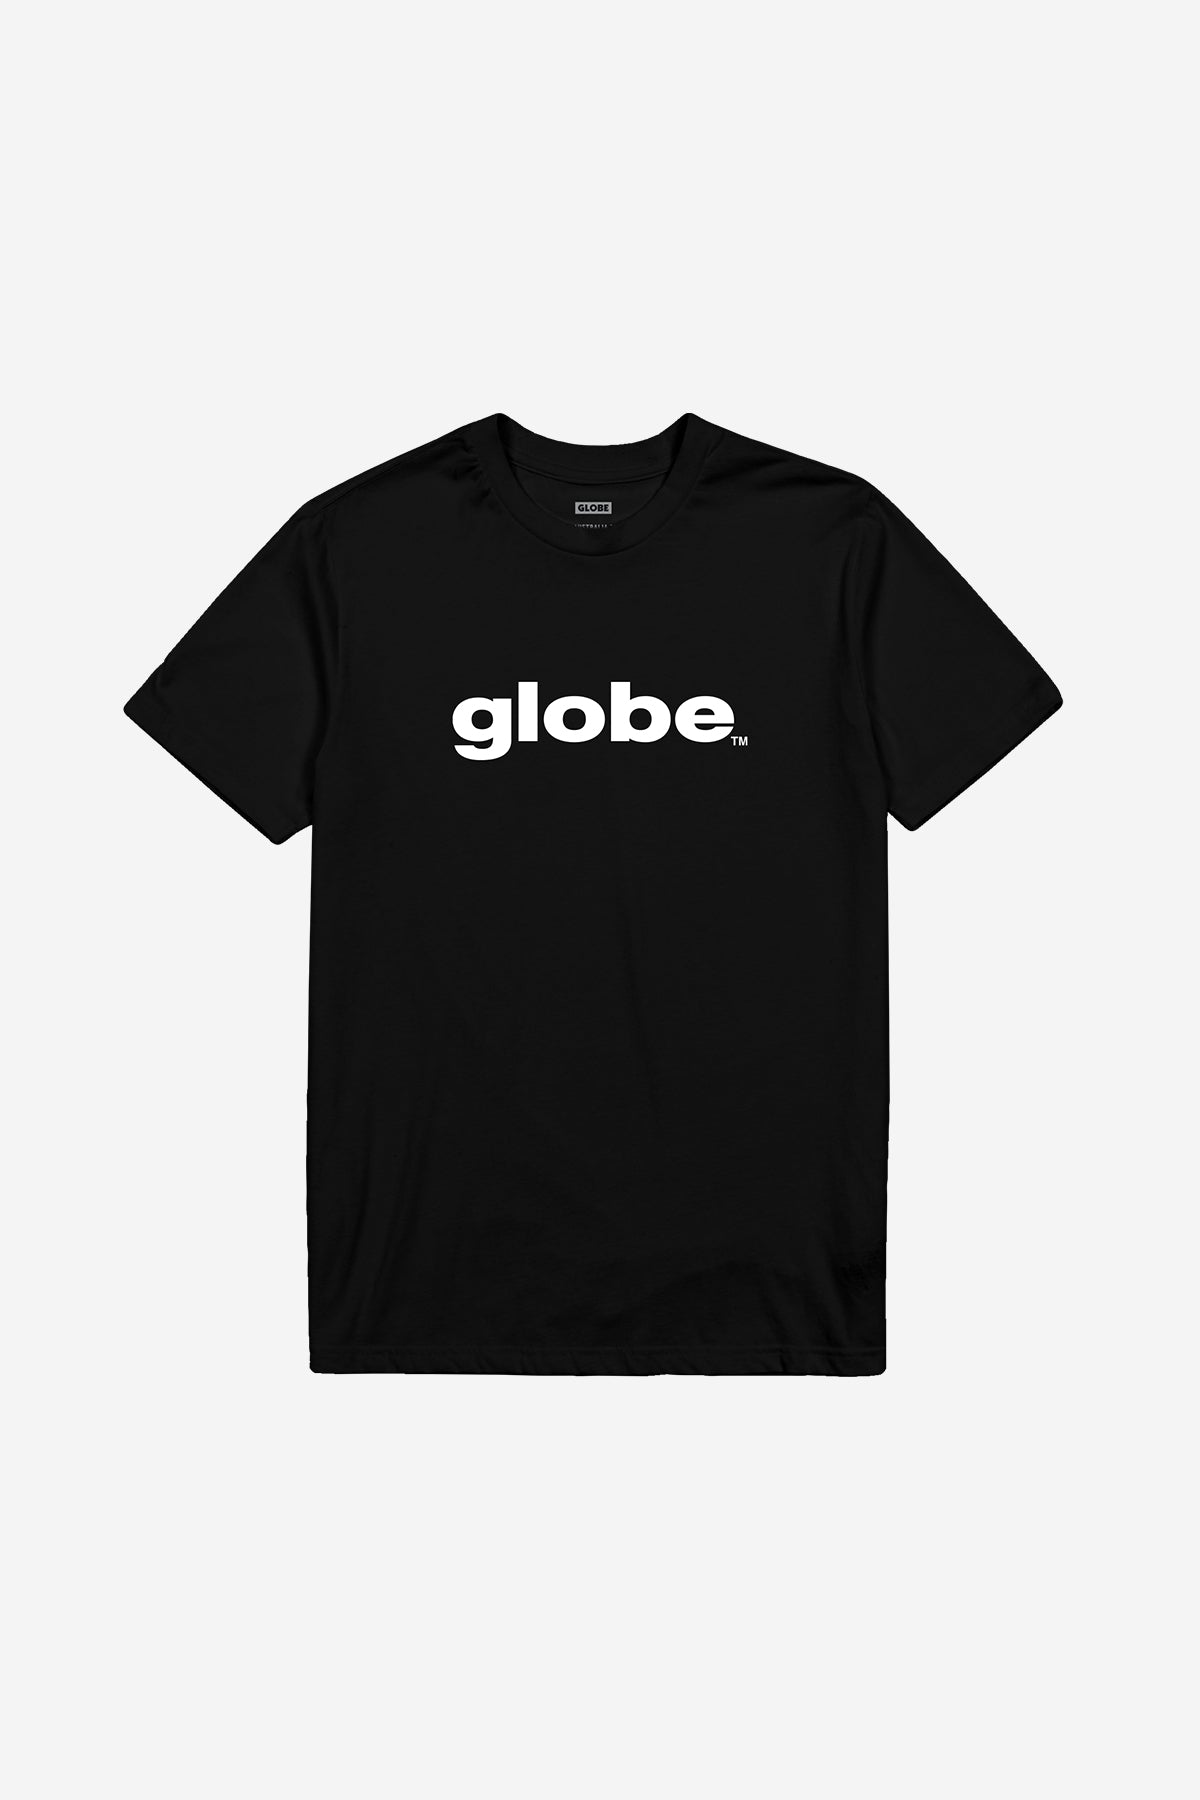 Globe - Camiseta O.G - Negra